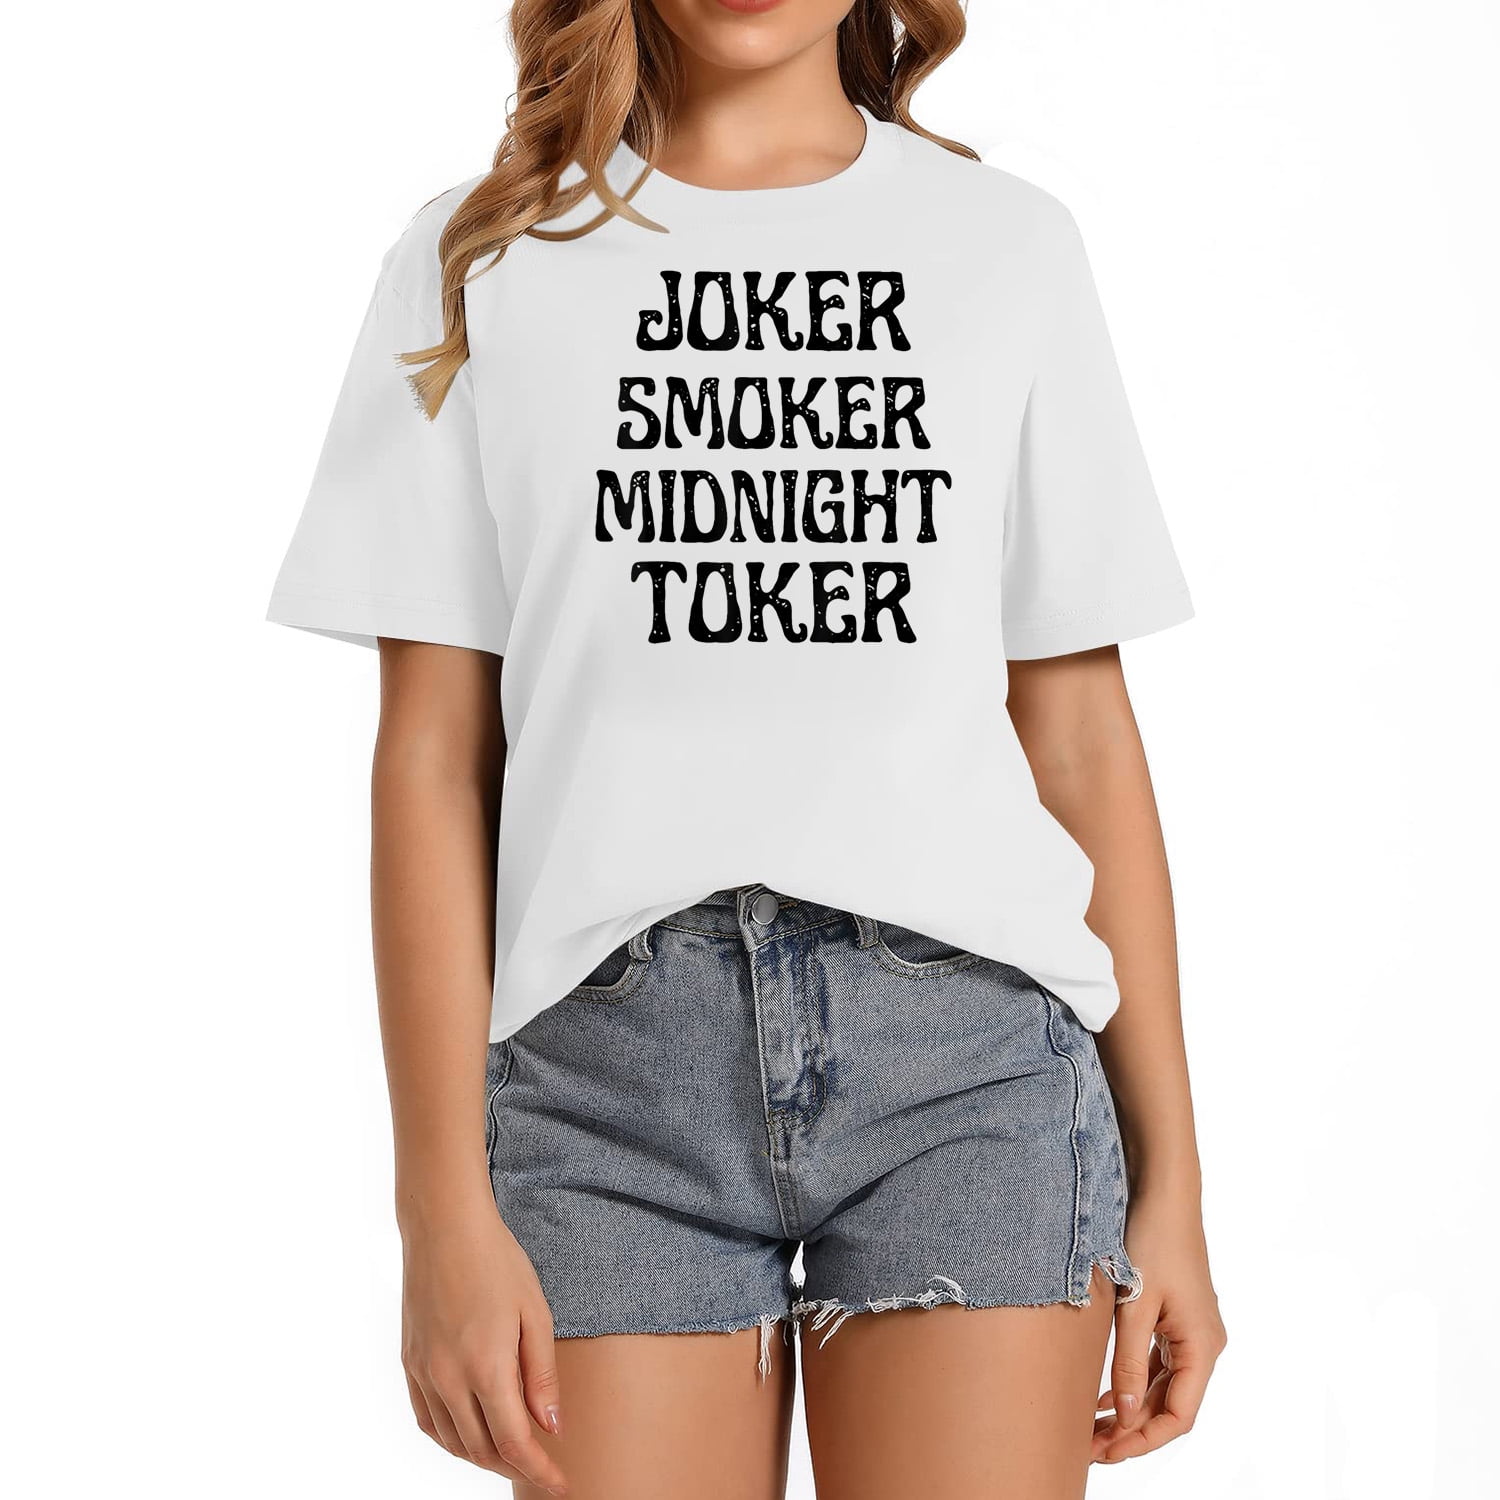 Joker Smoker Midnight Toker Funny Quotes Classic T-Shirt 